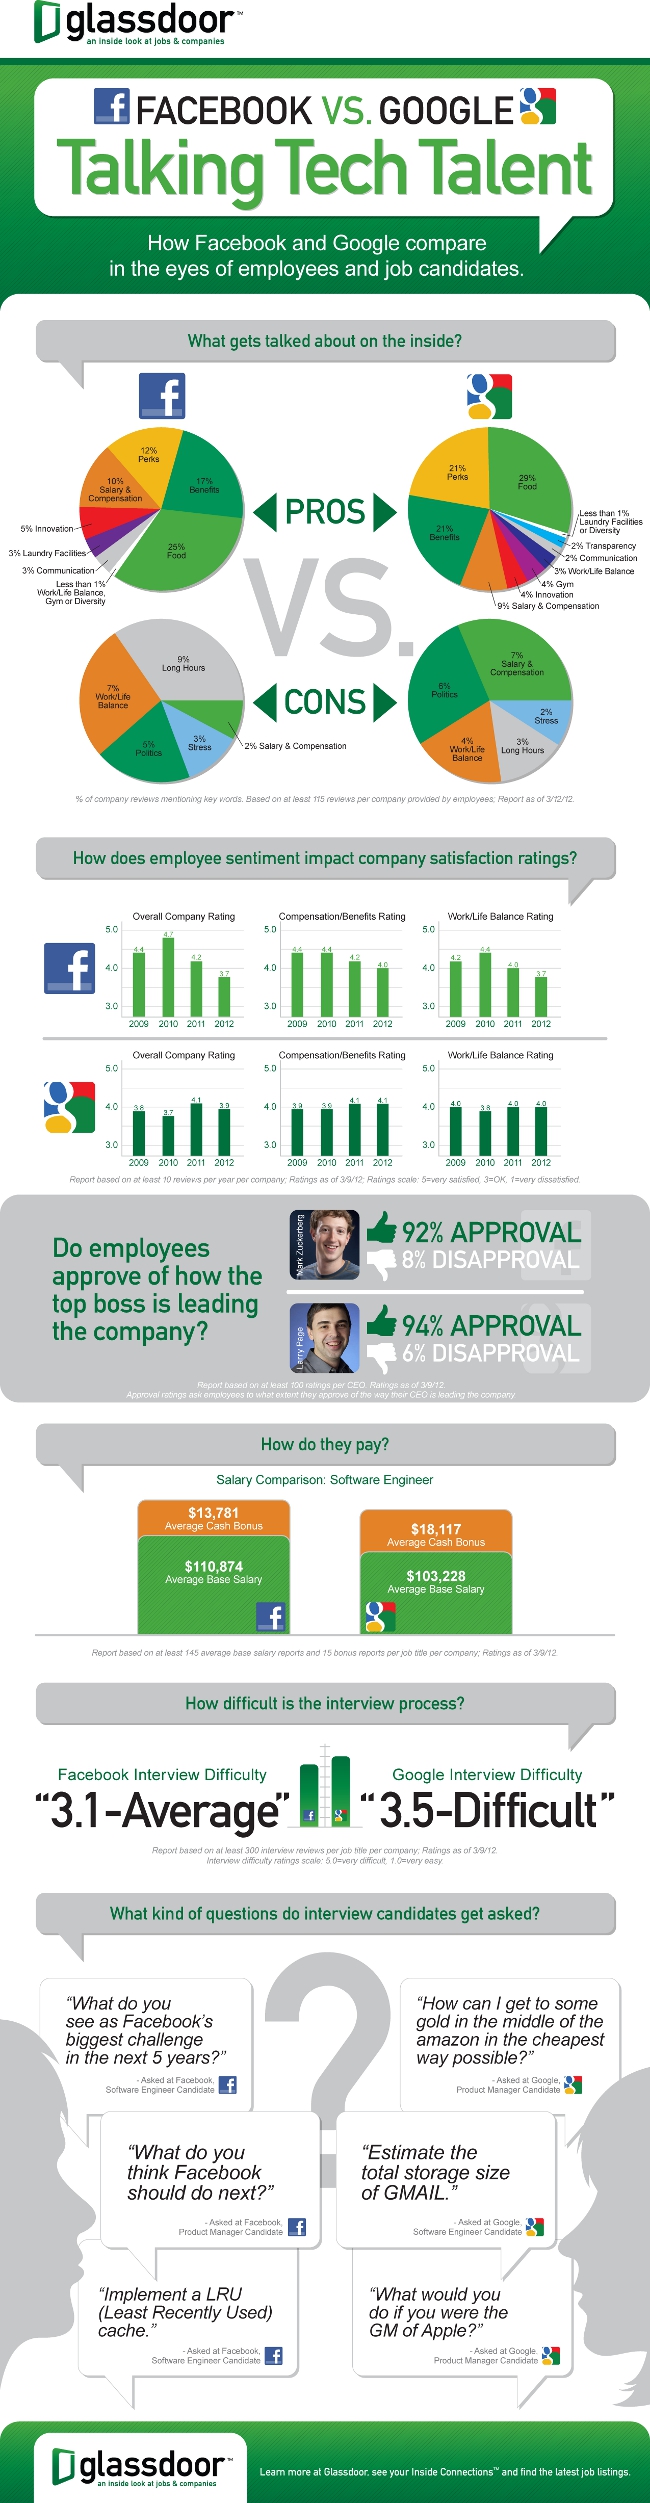 Facebook vs Google infographic